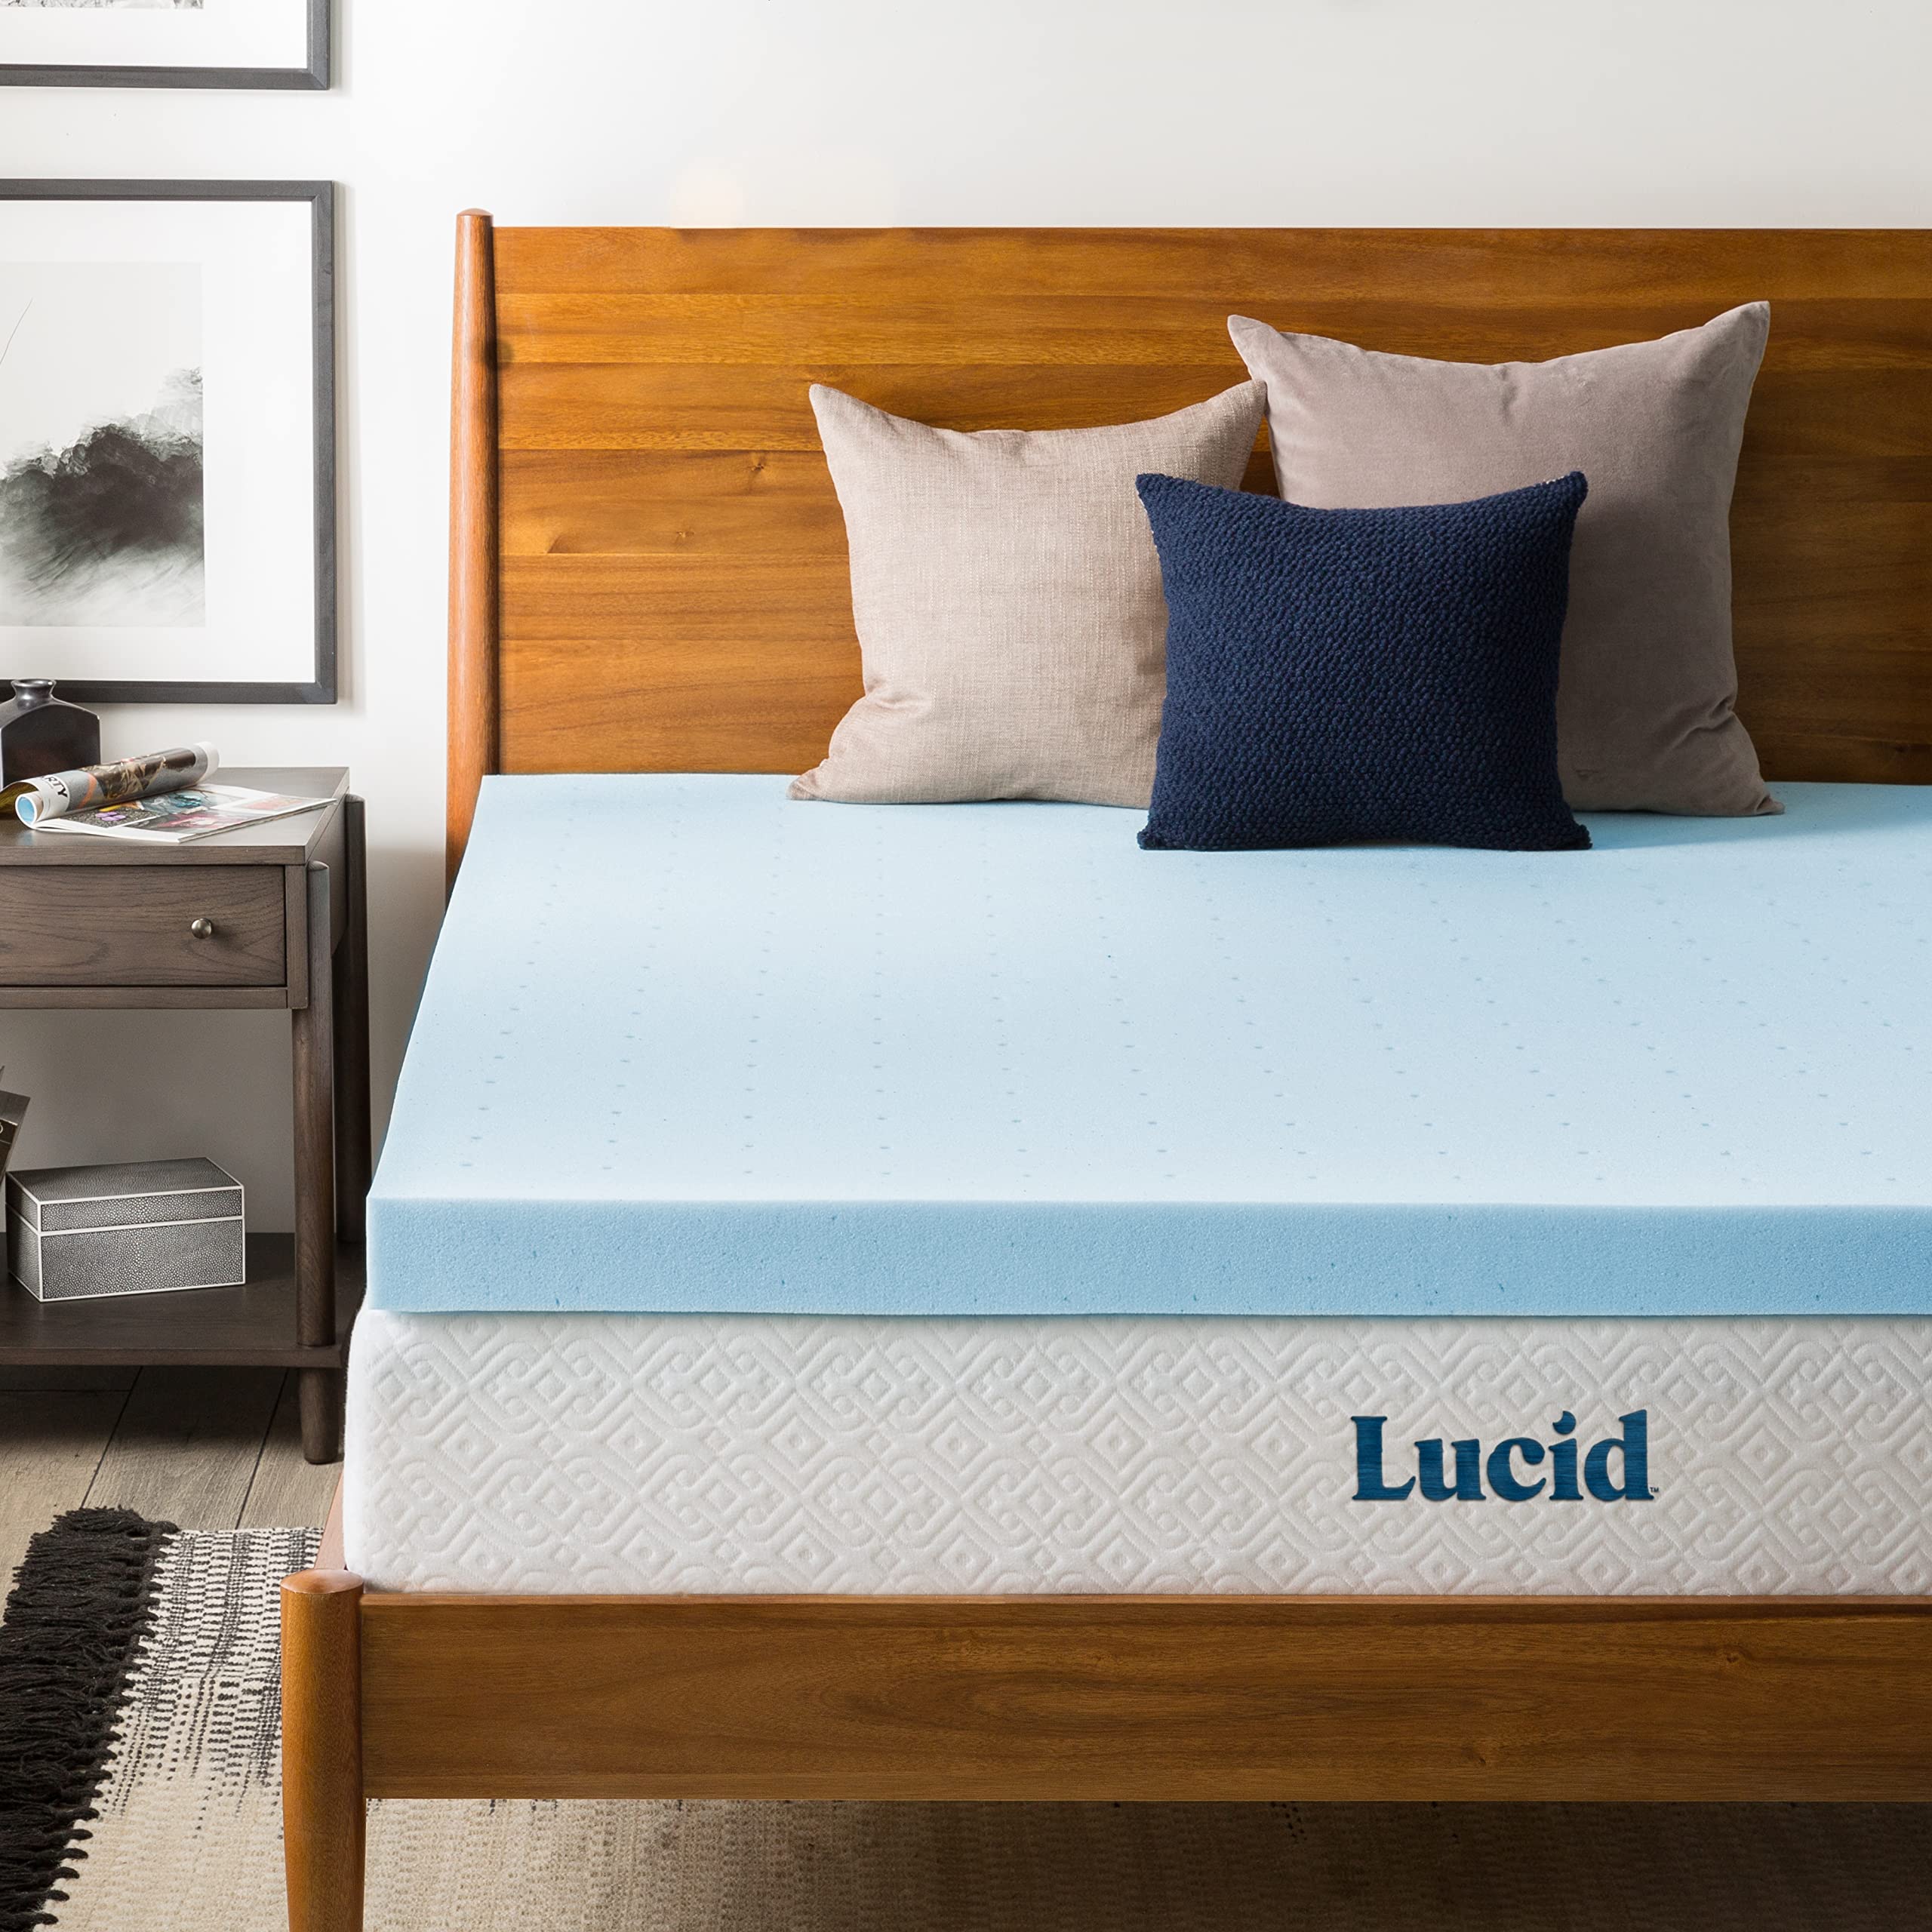 Lucid 3 英寸床垫罩全 - 凝胶注入记忆海绵 记忆海绵床垫罩全通风设计 CertiPur 认证蓝色